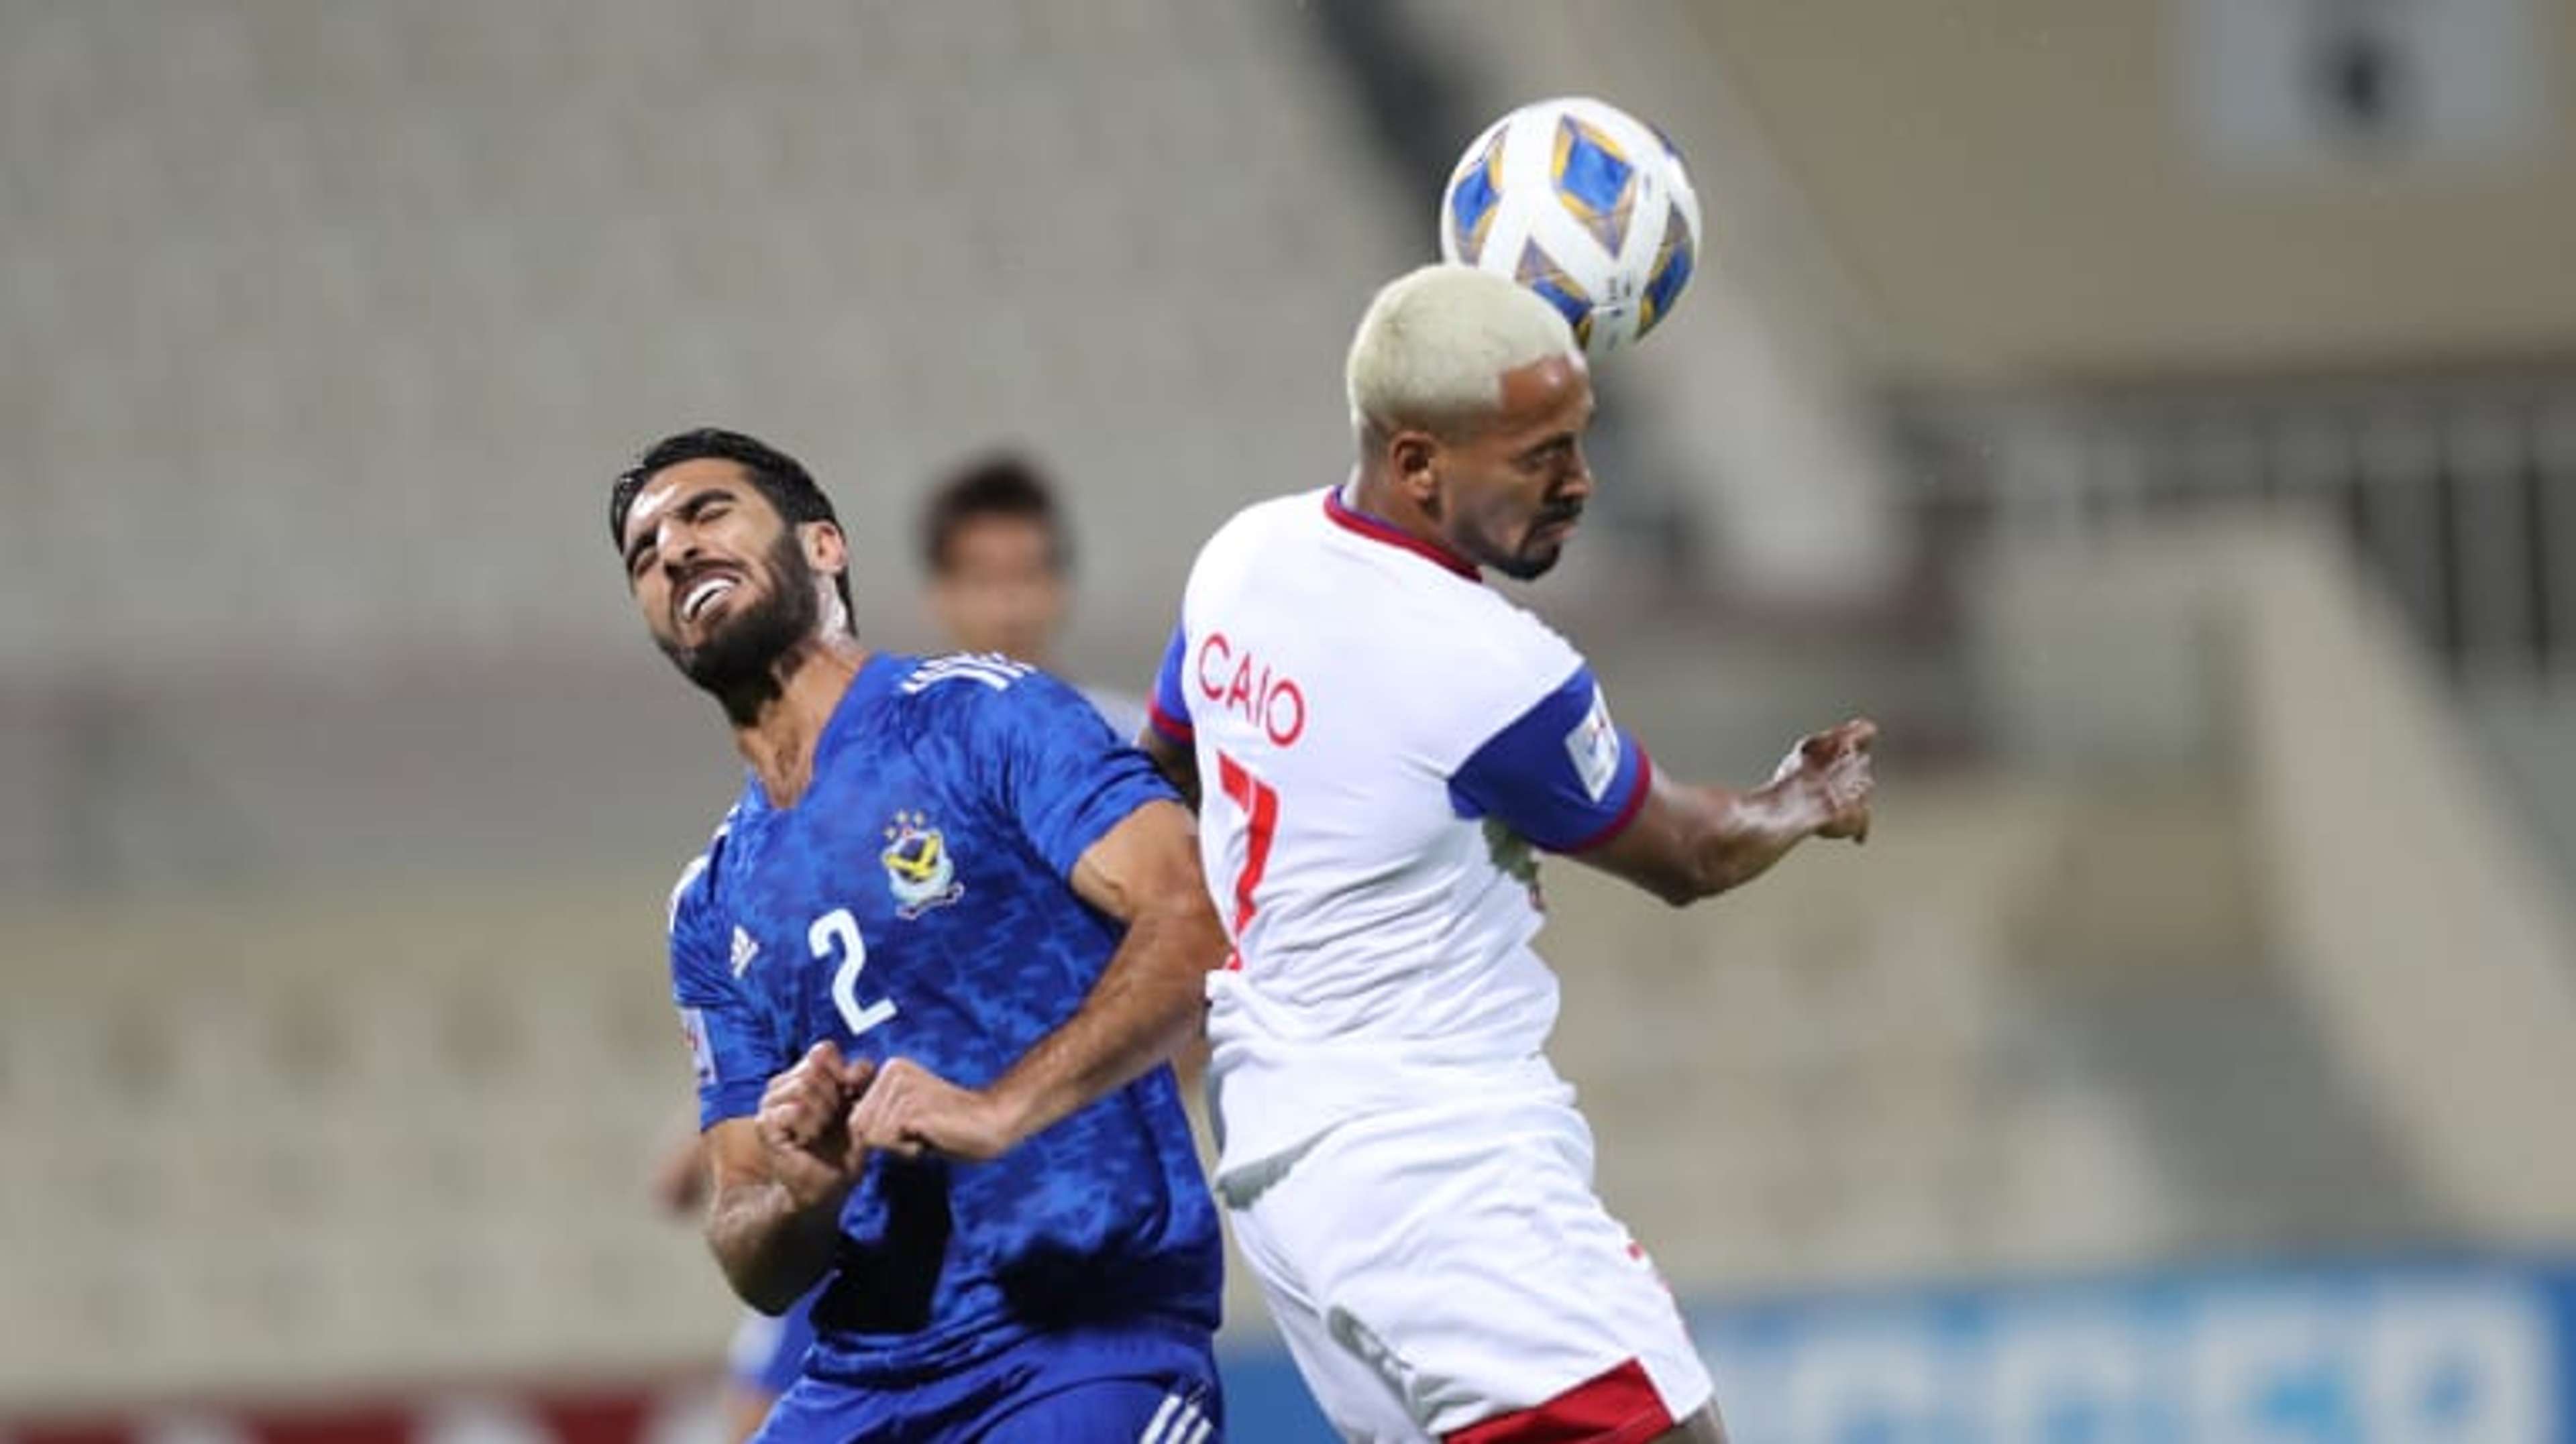 Caio Sharjah FC